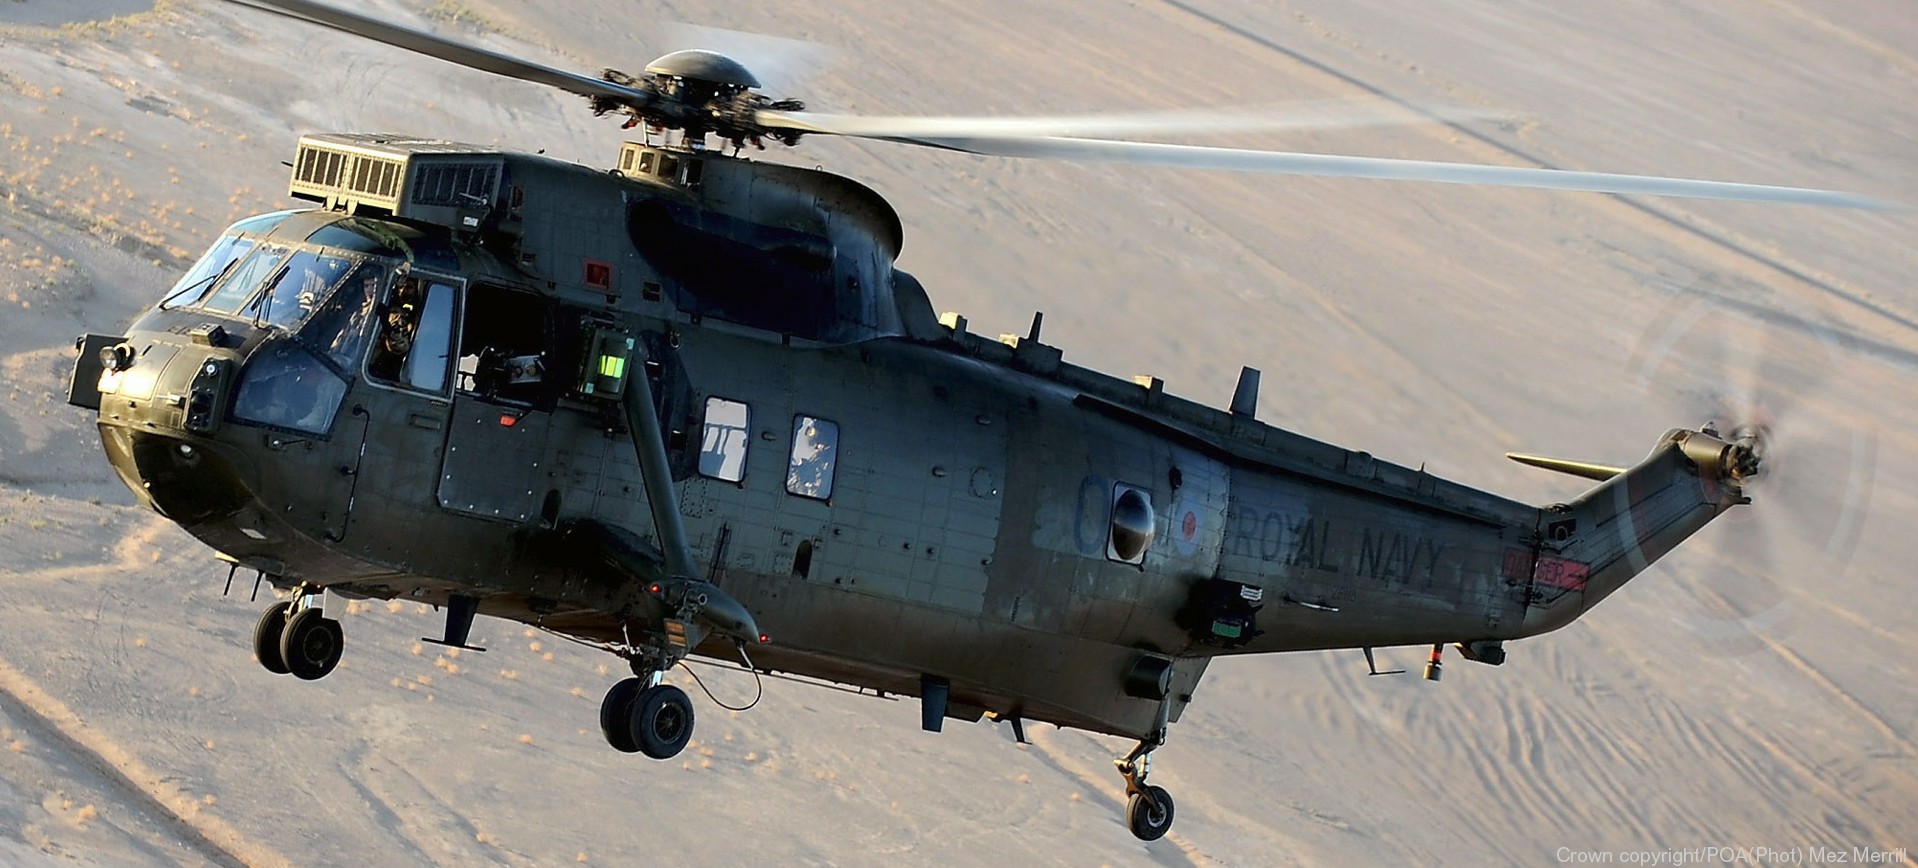 sea king hc.4 helicopter royal navy commando assault marines westland nas squadron rnas 23